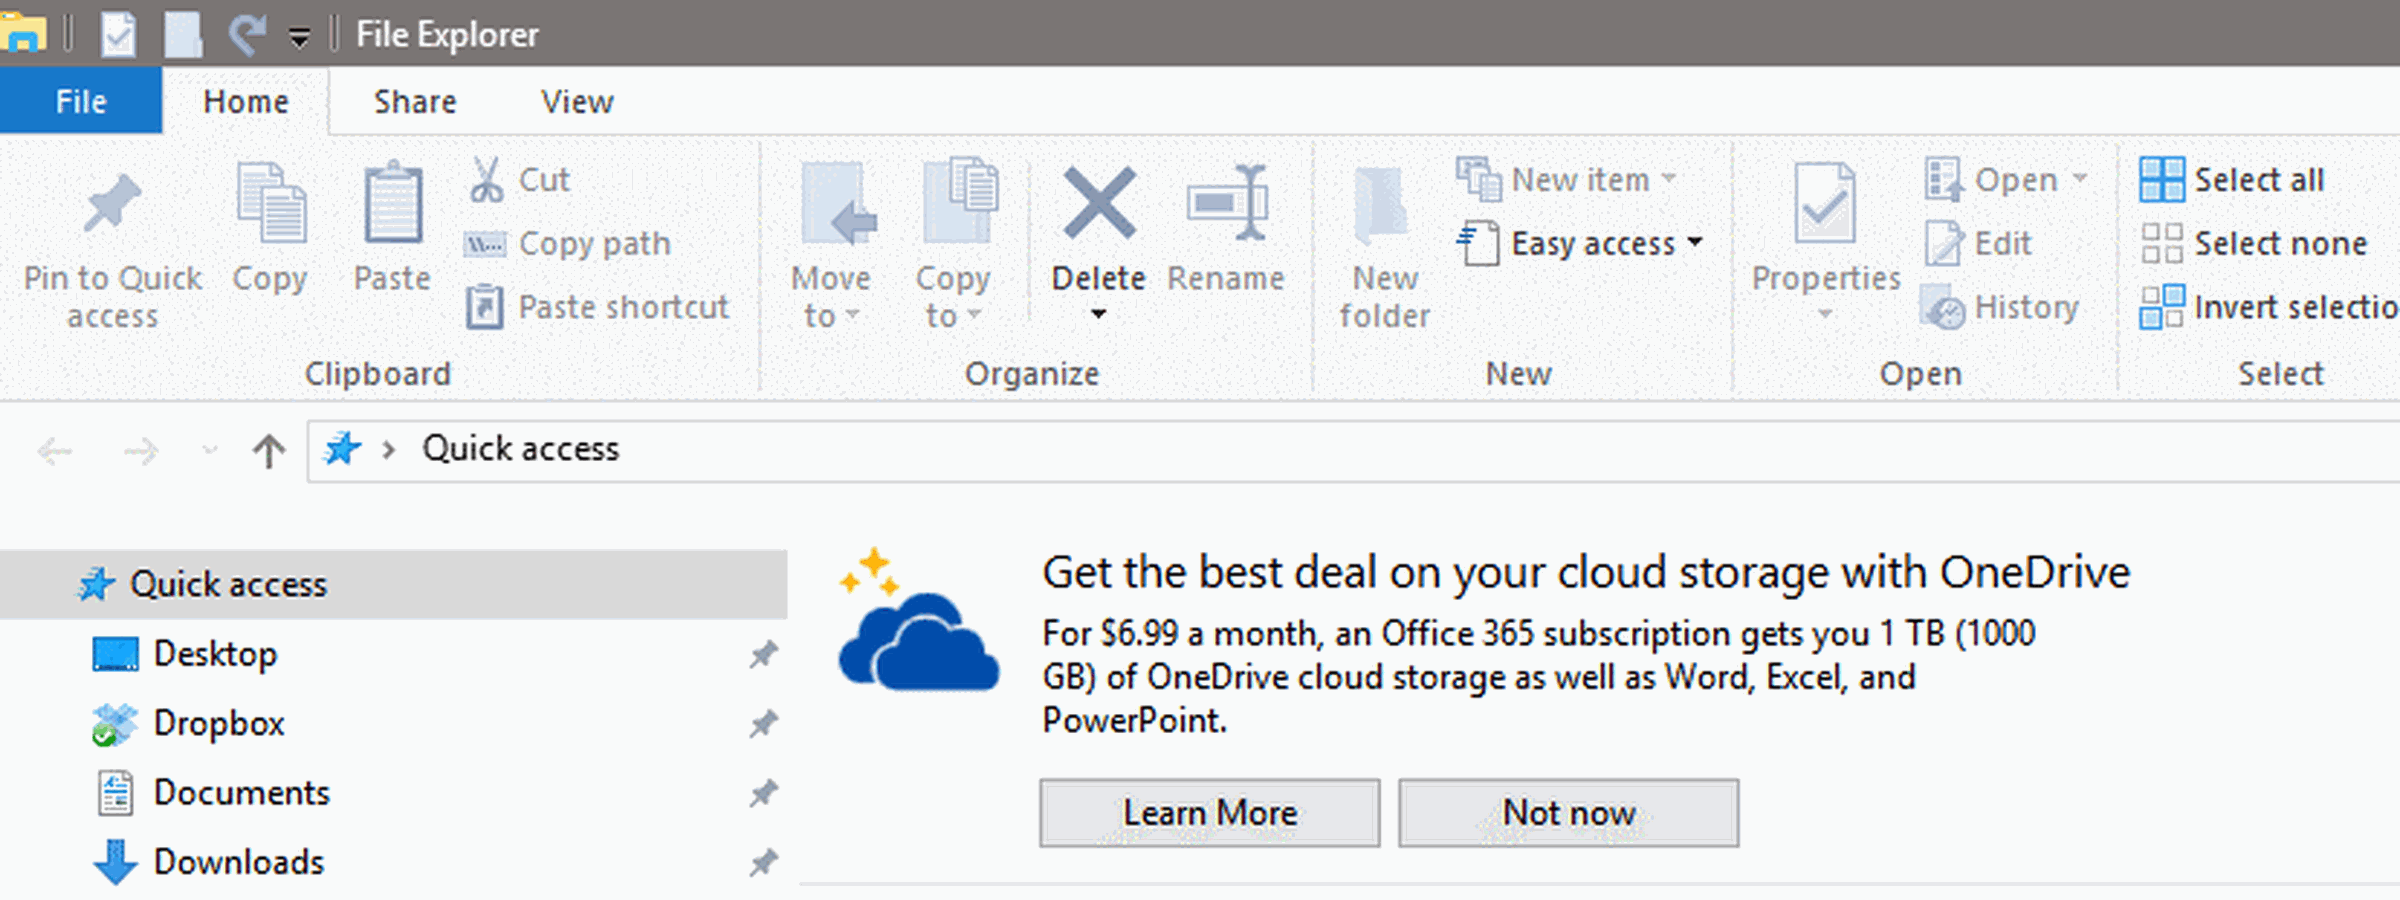 Office 365 ad inside File Explorer.